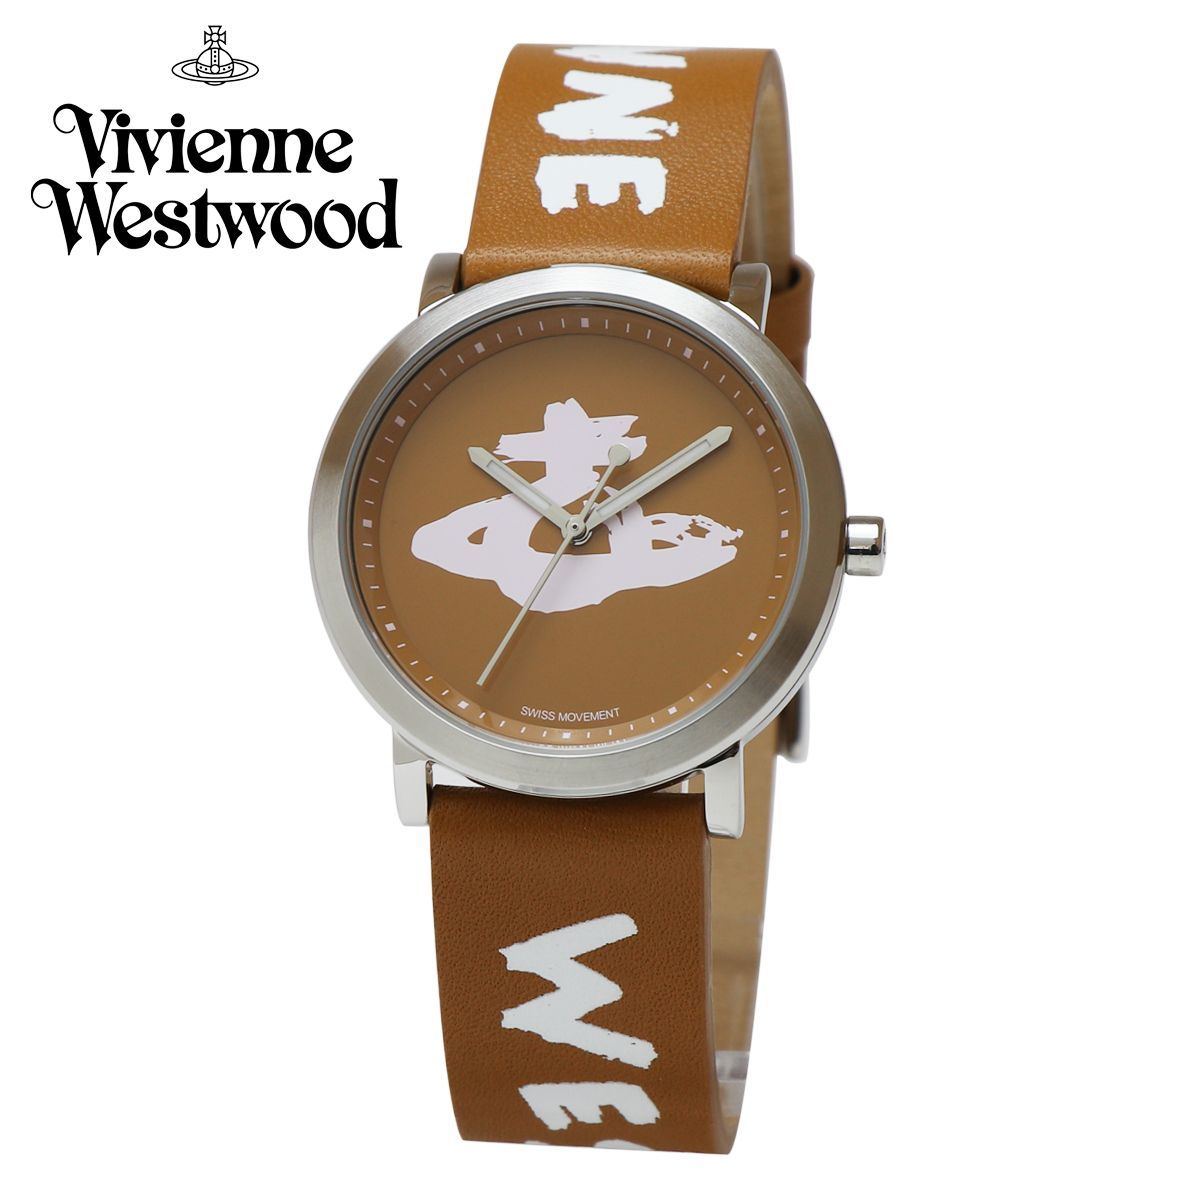 Vivienne Westwood ヴィヴィアン ウエストウッド 時計 手書き風